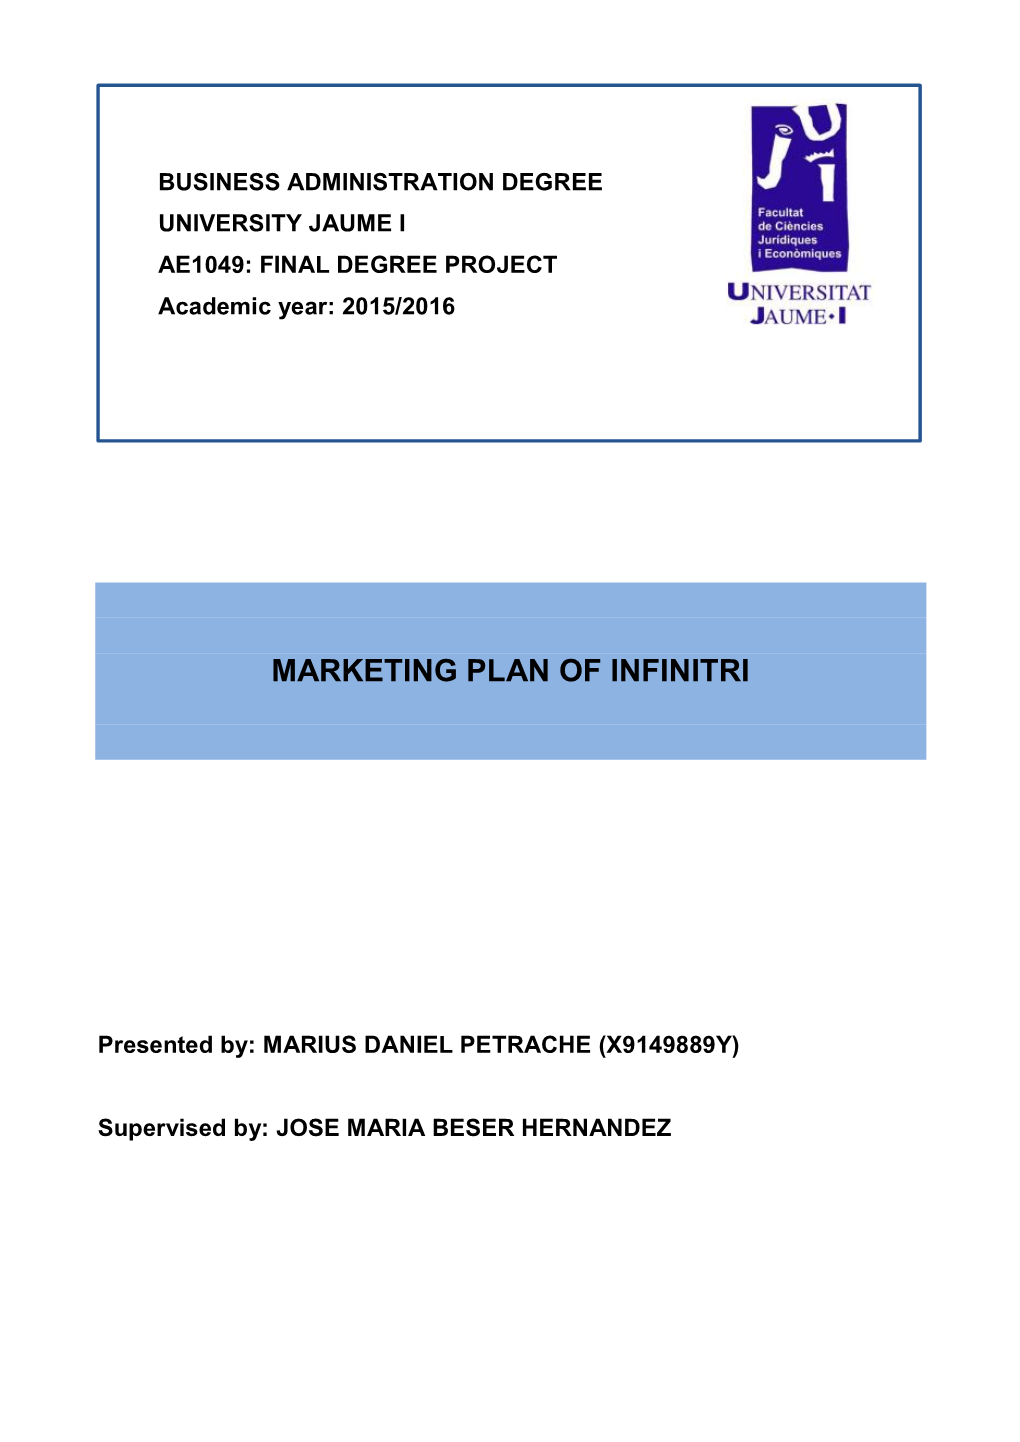 Marketing Plan of Infinitri